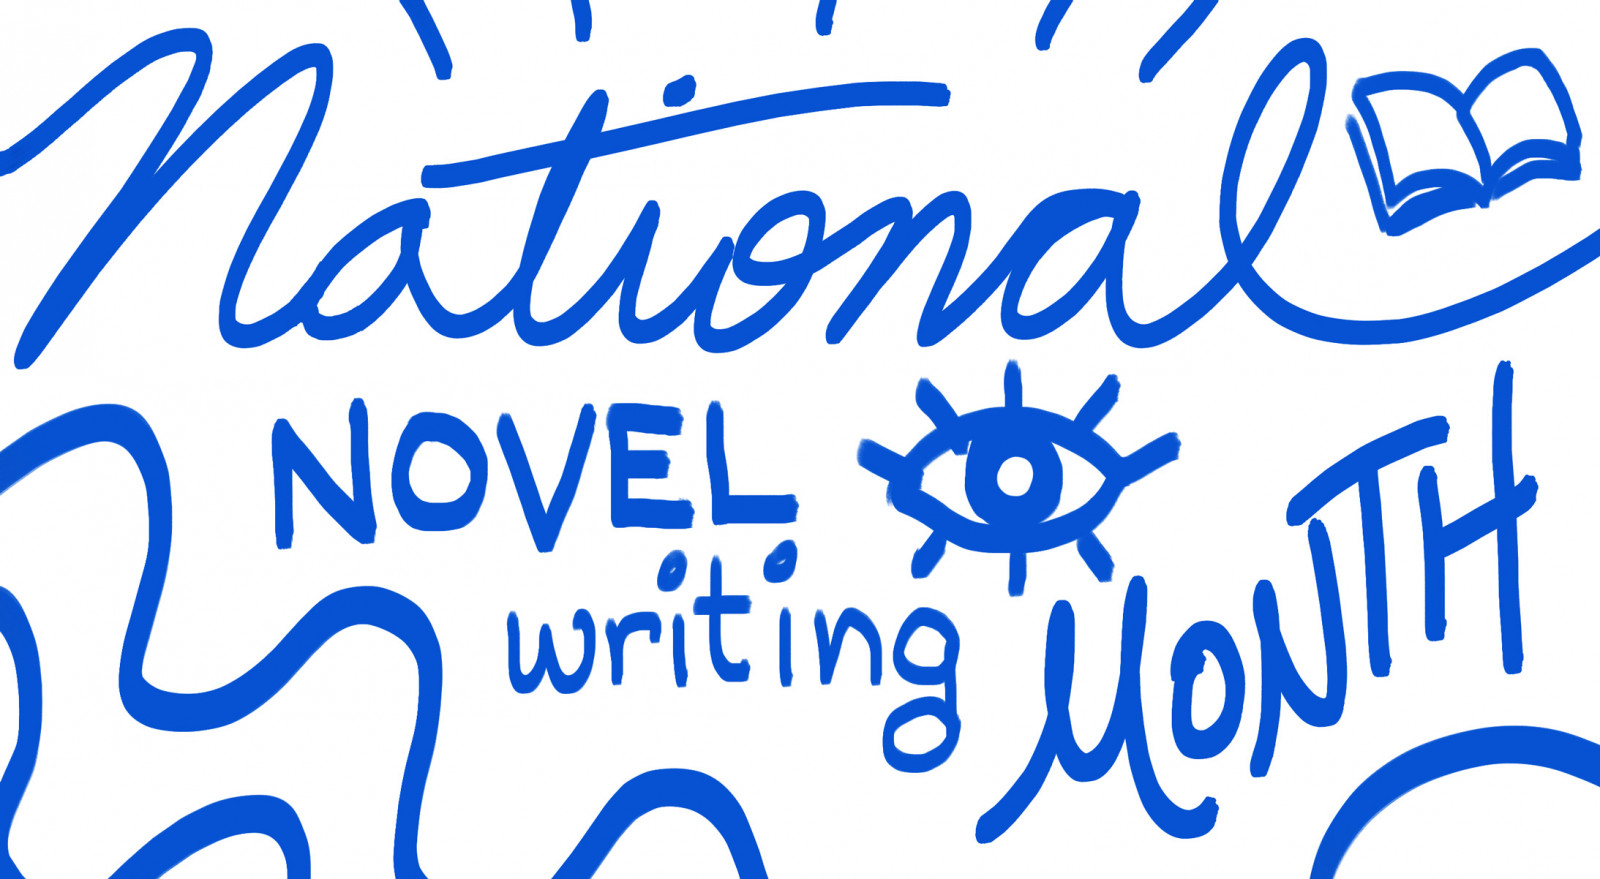 National Novel Writing Month at Nibs.com